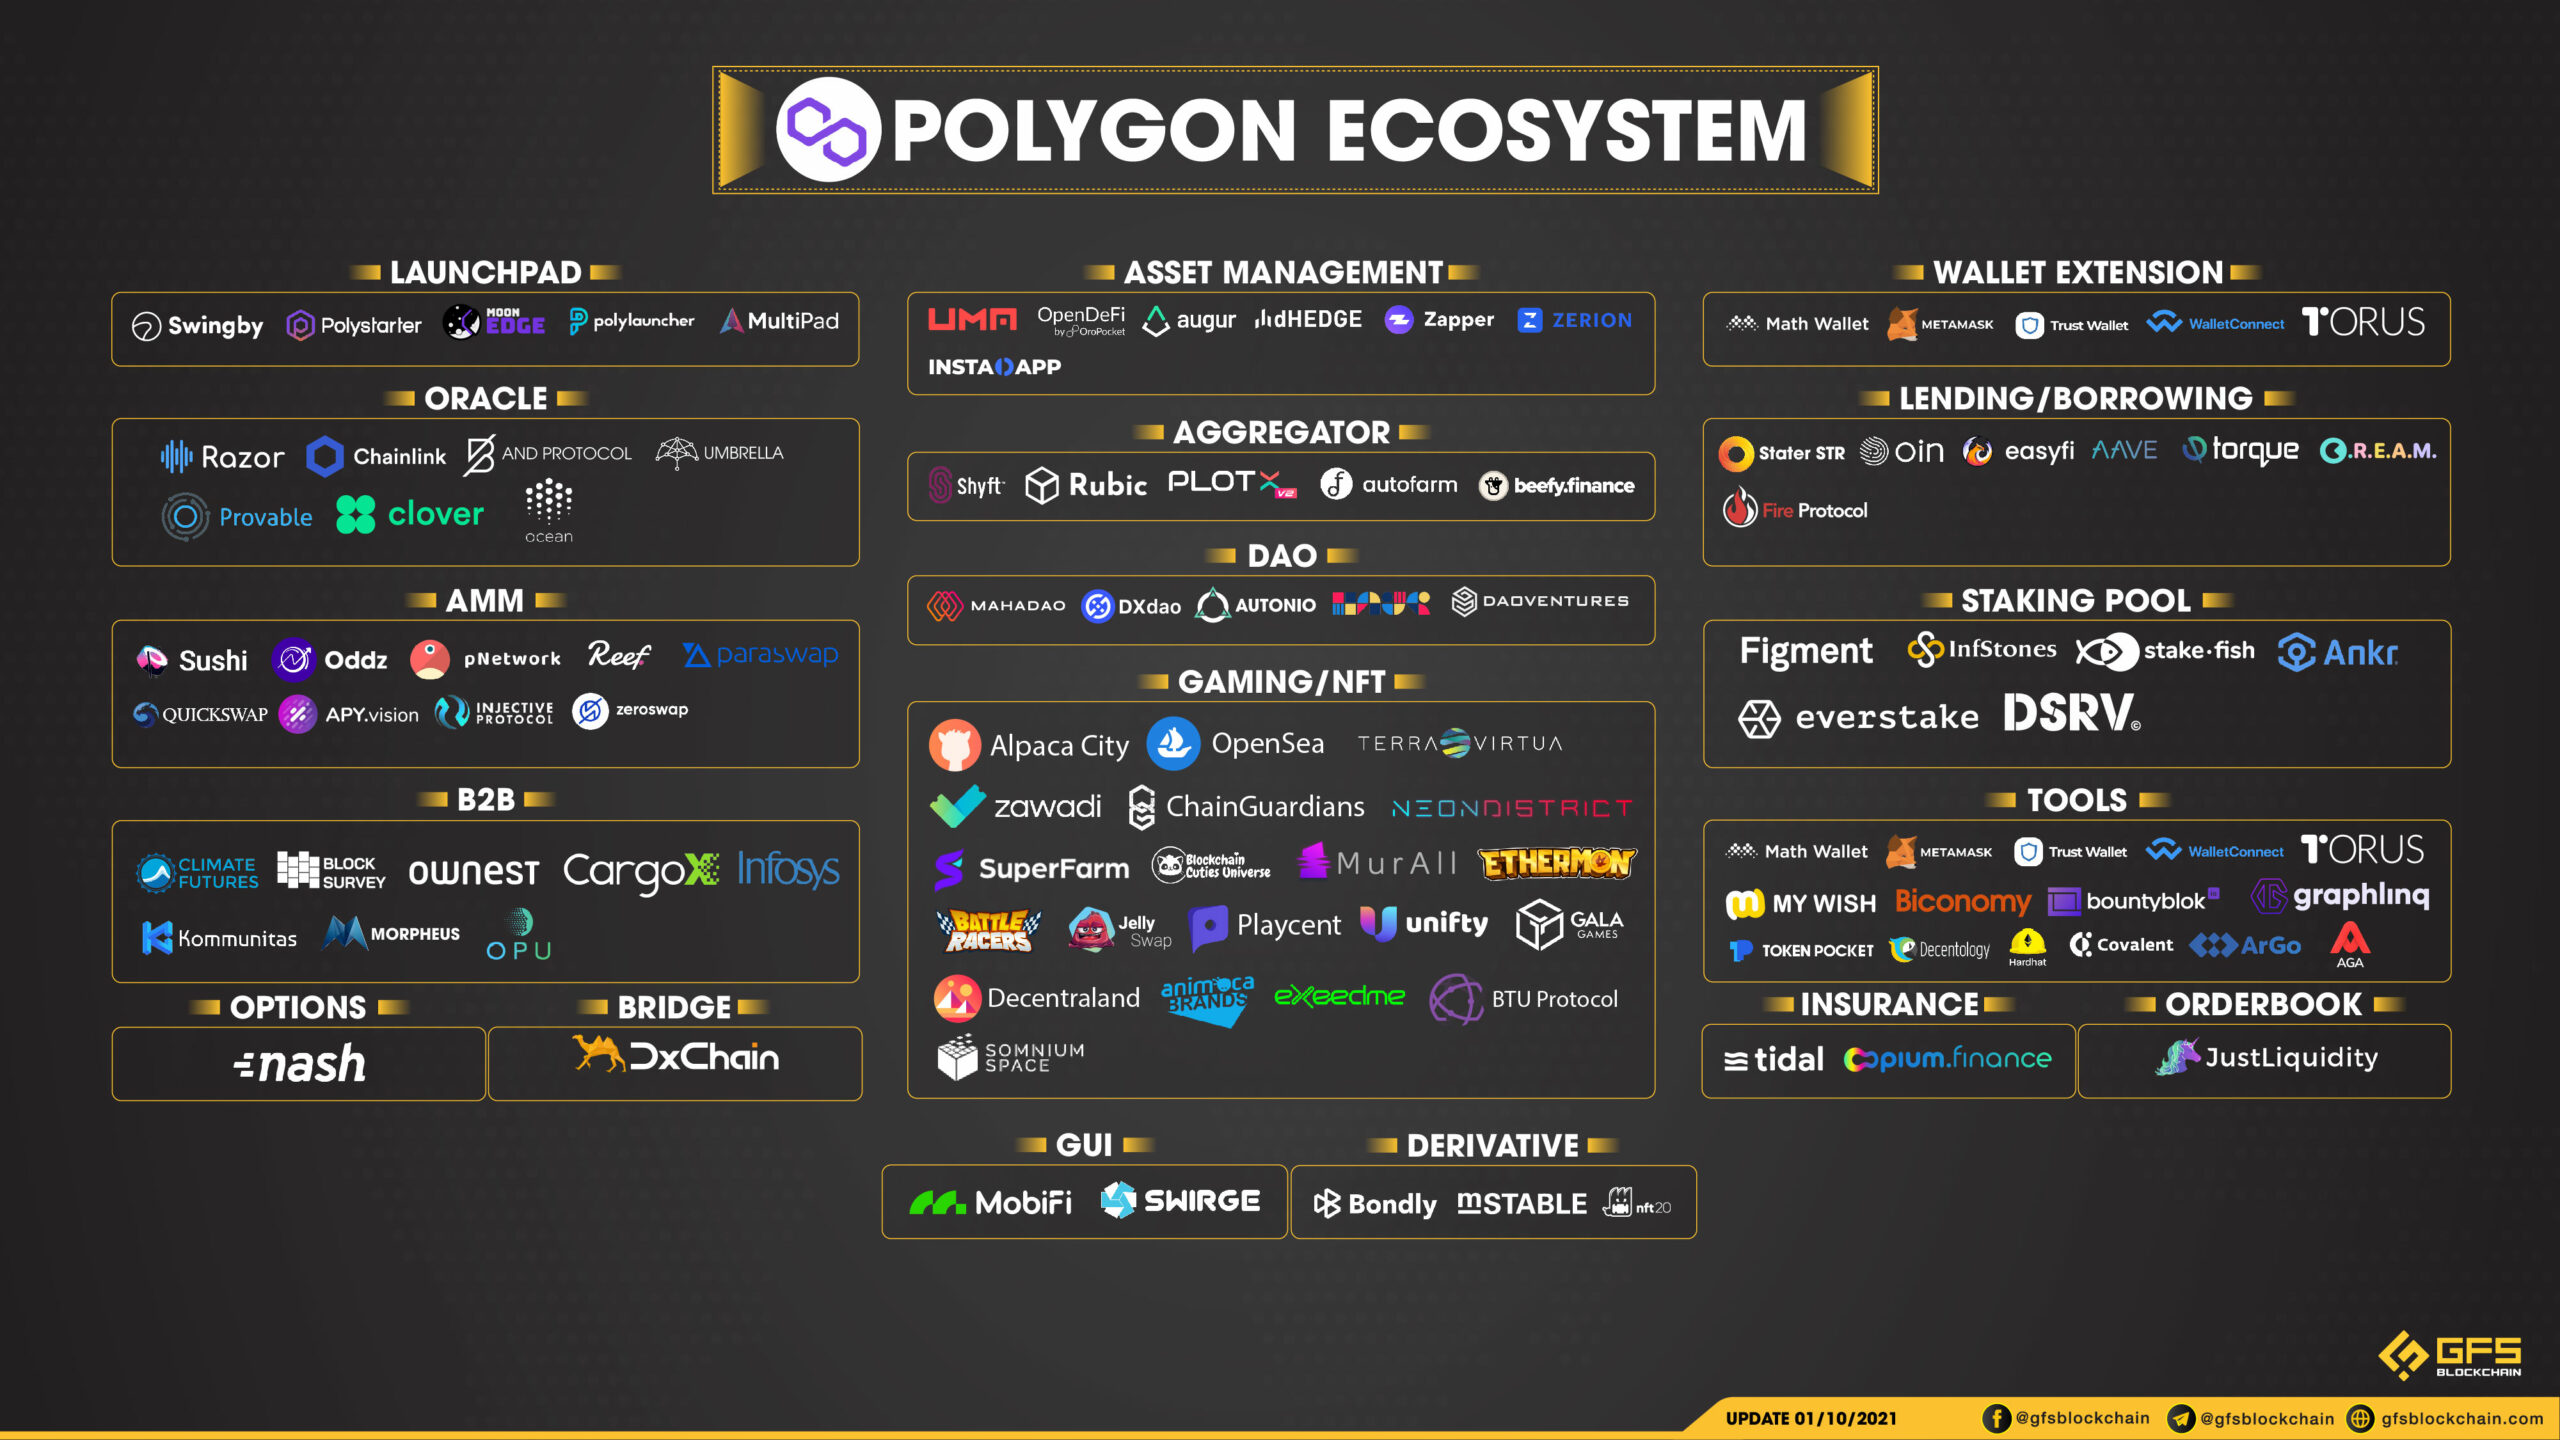 Polygon Ecosystem